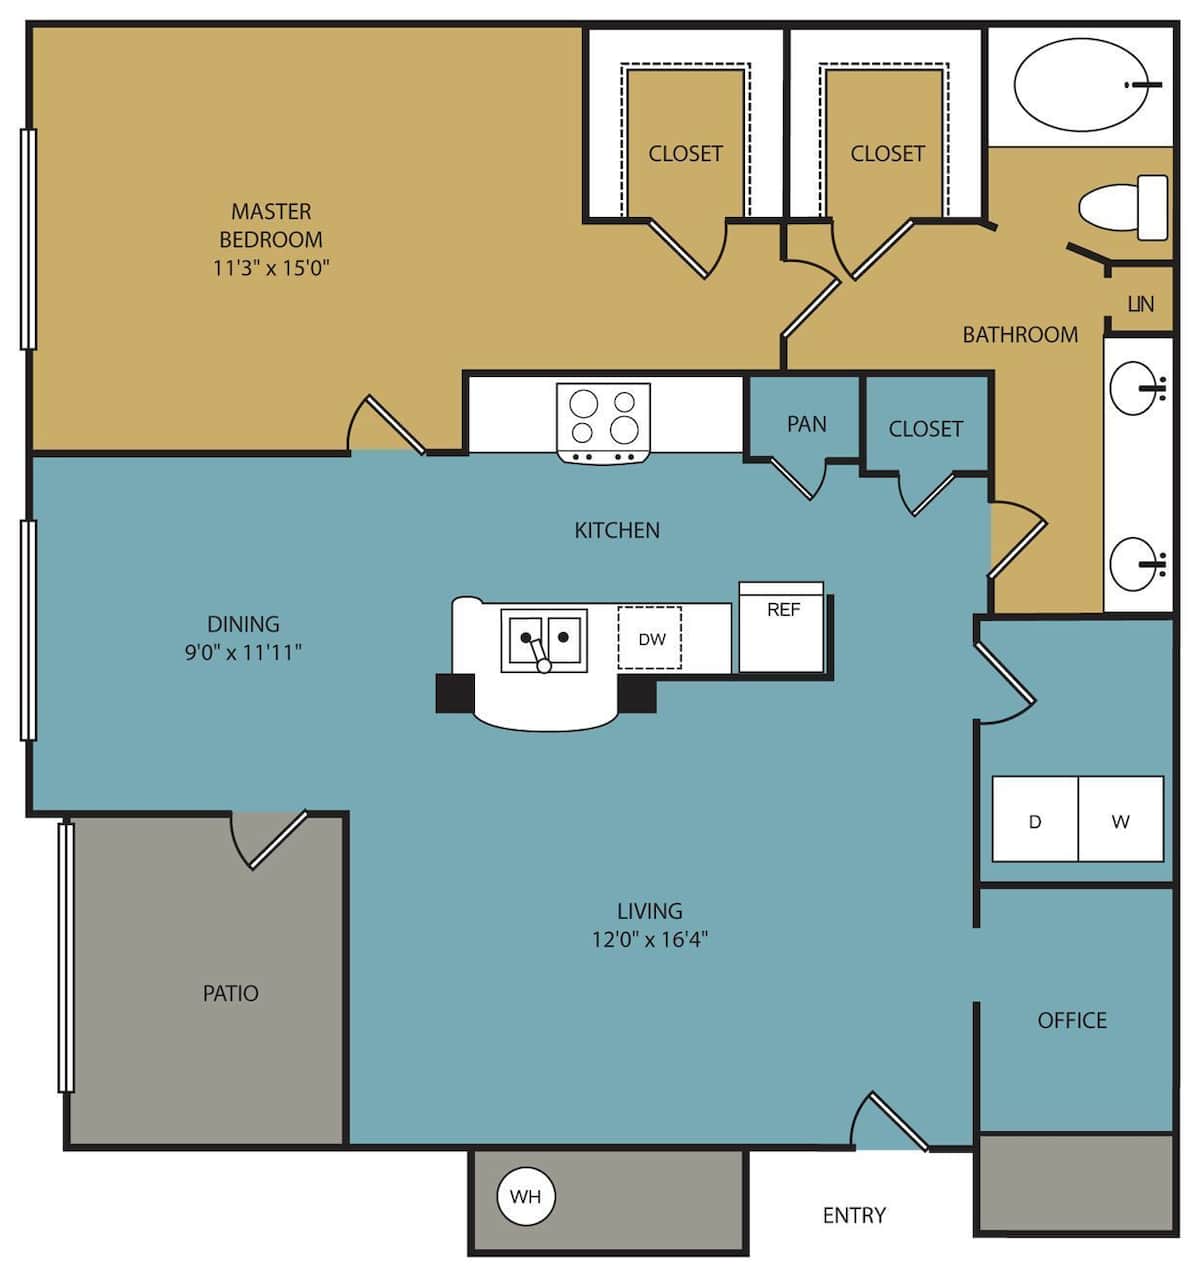 Floorplan diagram for Drake - A4, showing 1 bedroom